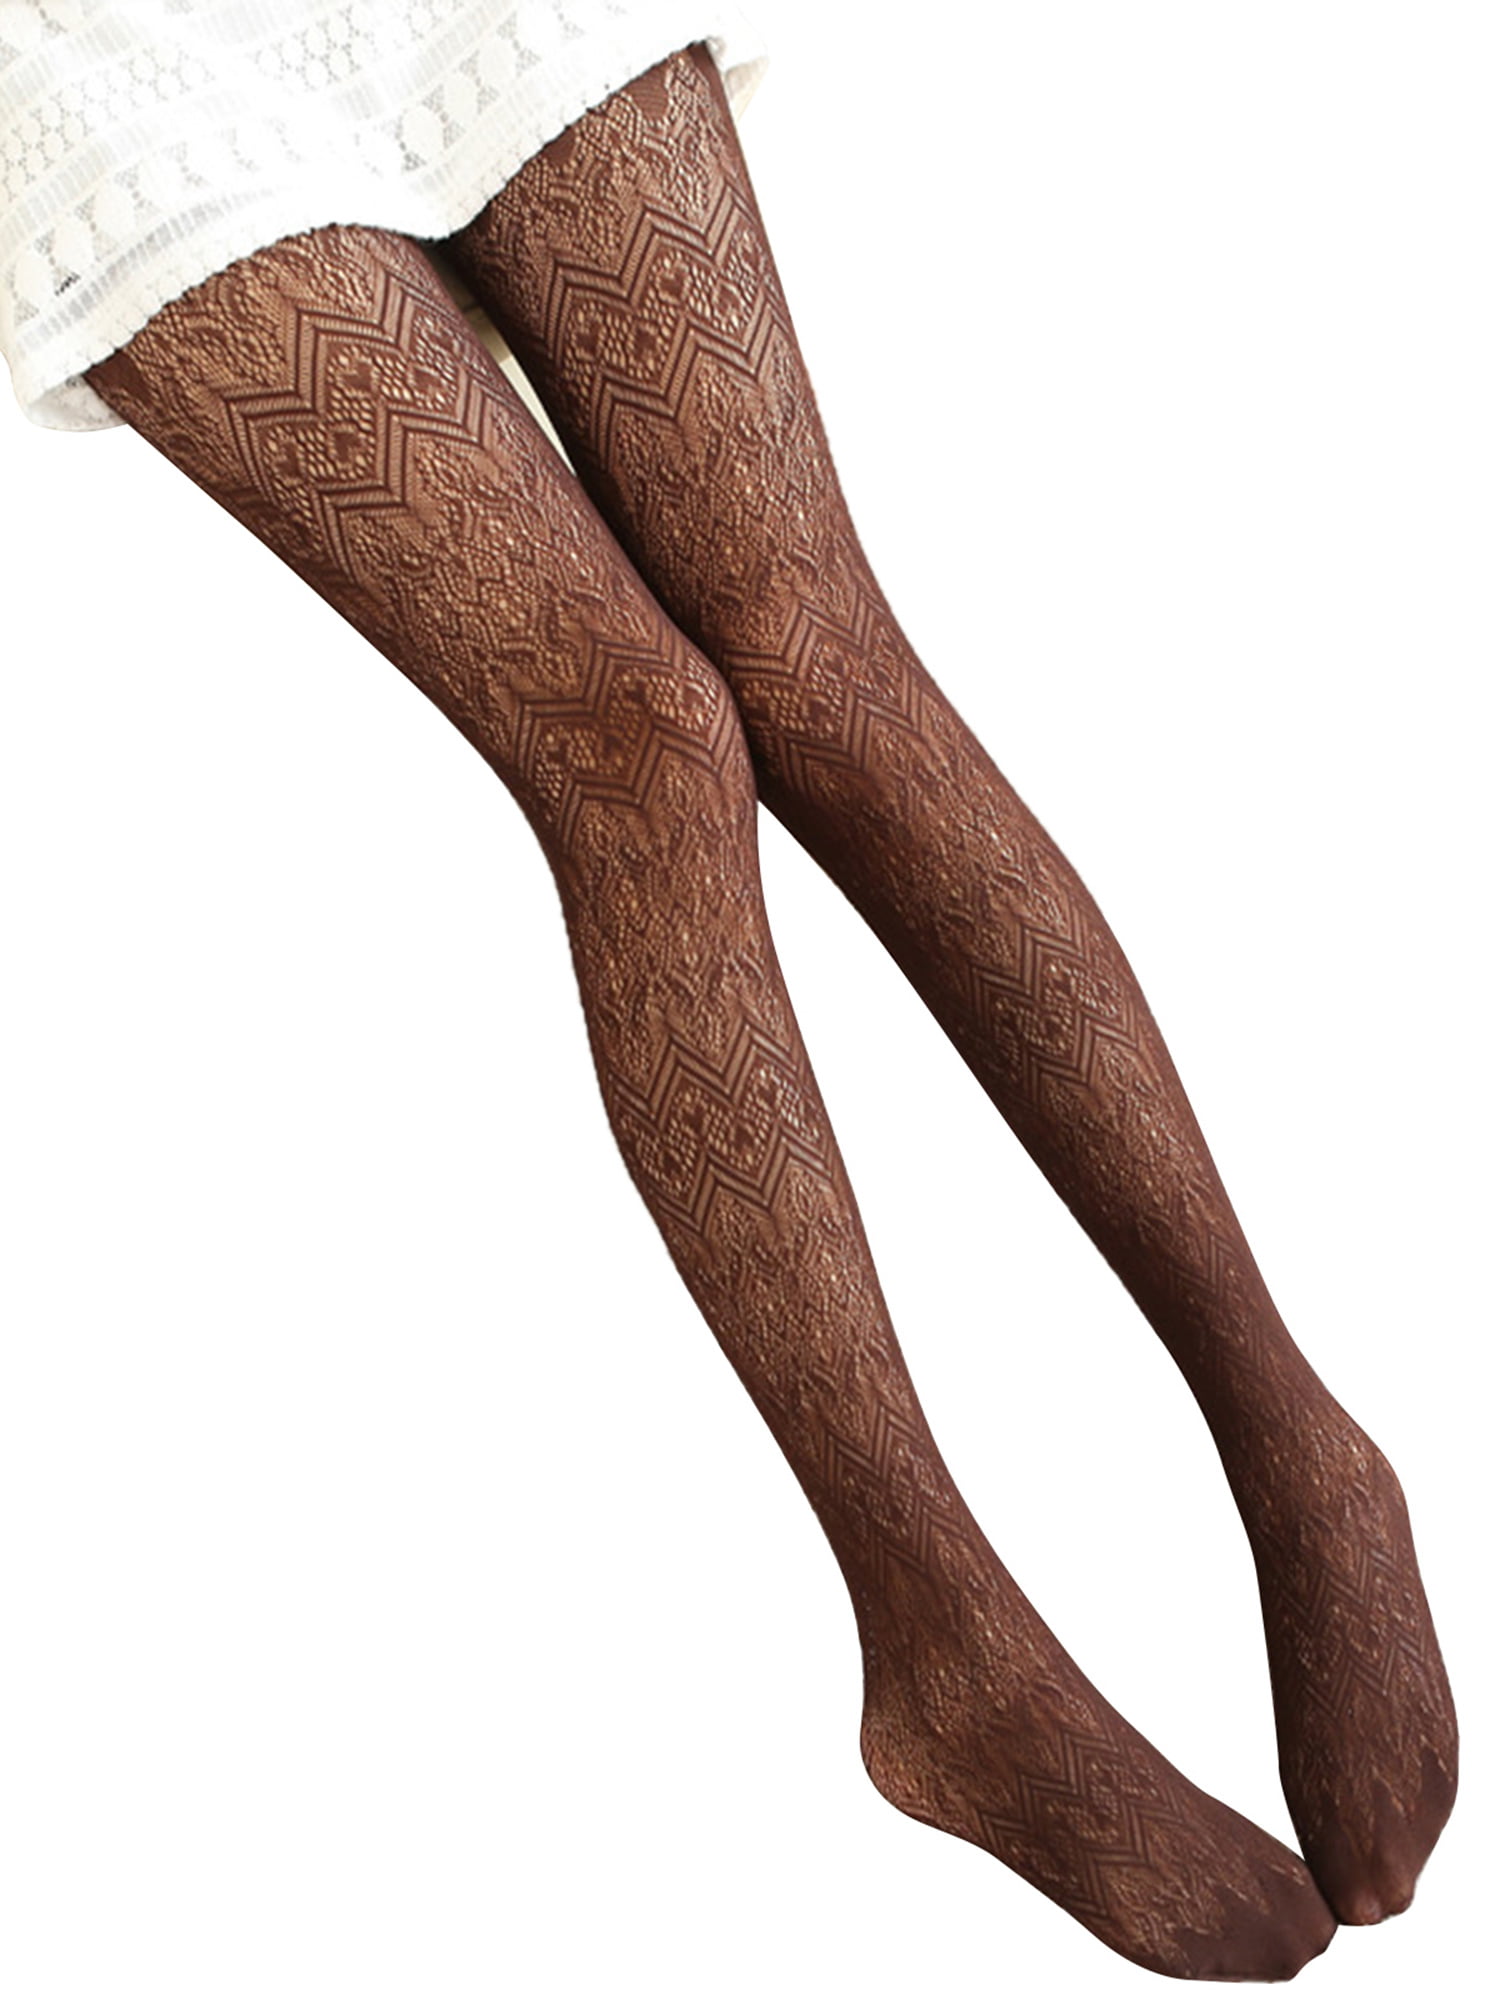 Cream creamy white fishnet stockings hold ups ladies girls pair of Lace tops NEW 